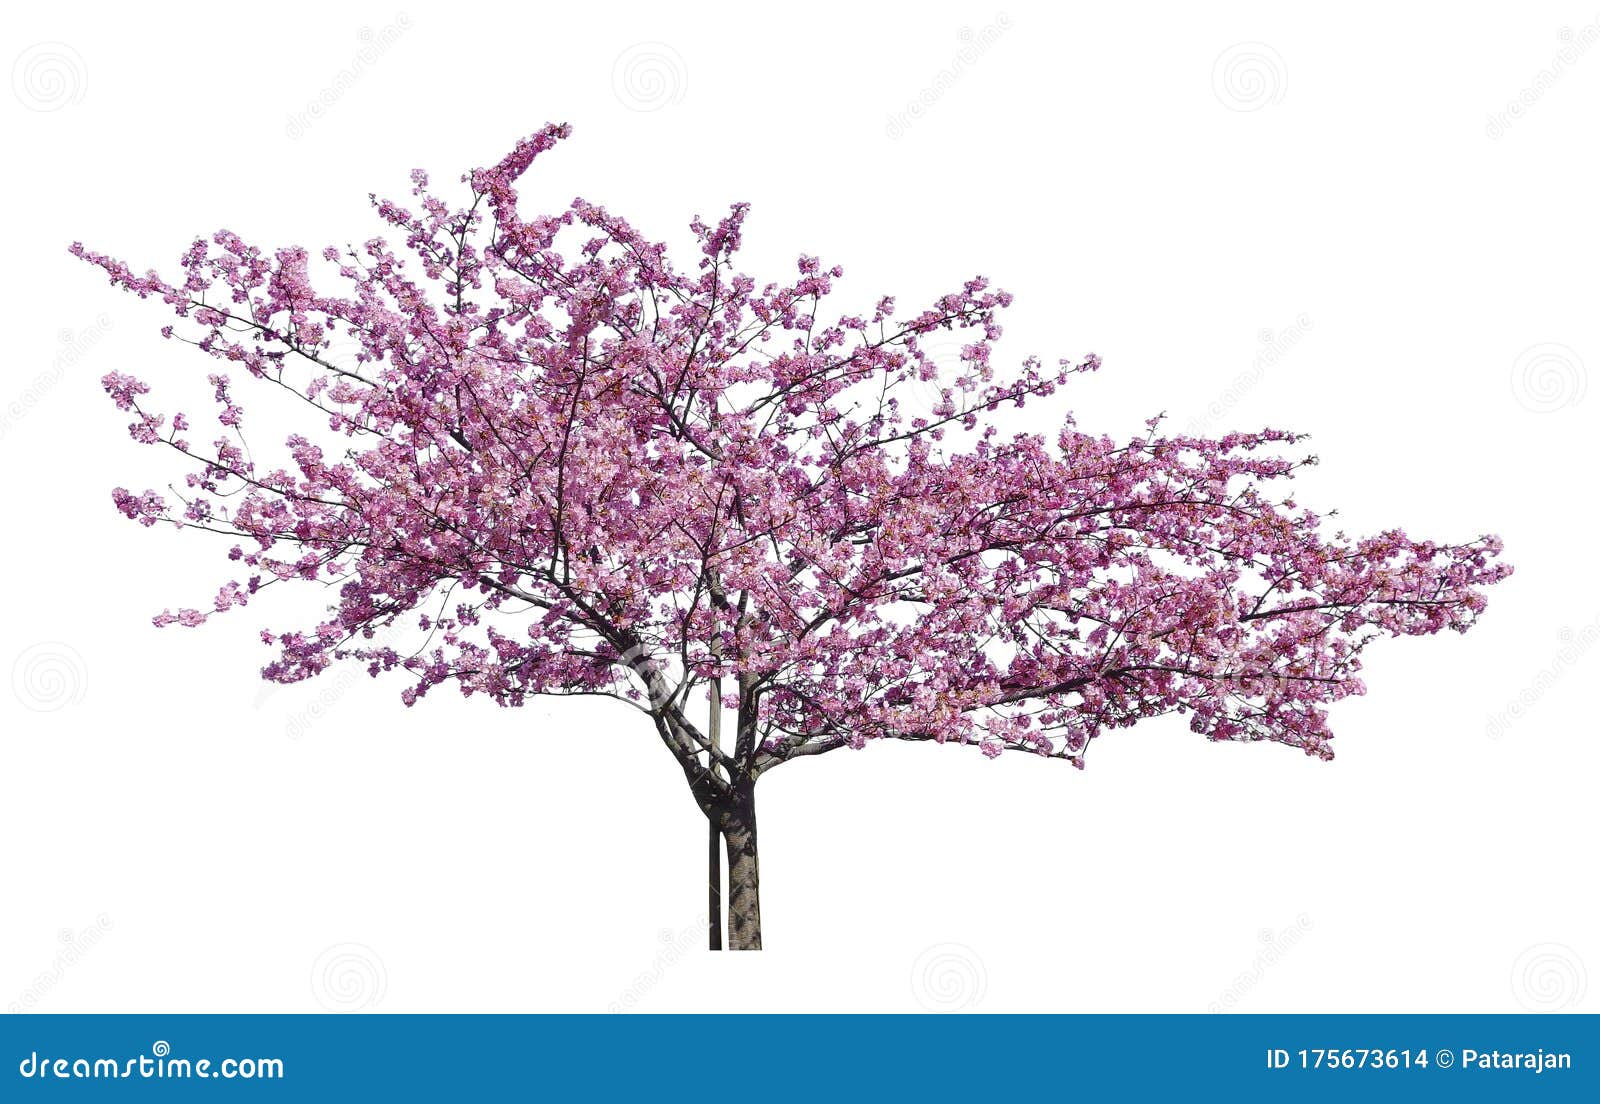 japanese sakura, full blooming pink cherry blossoms tree  on white background